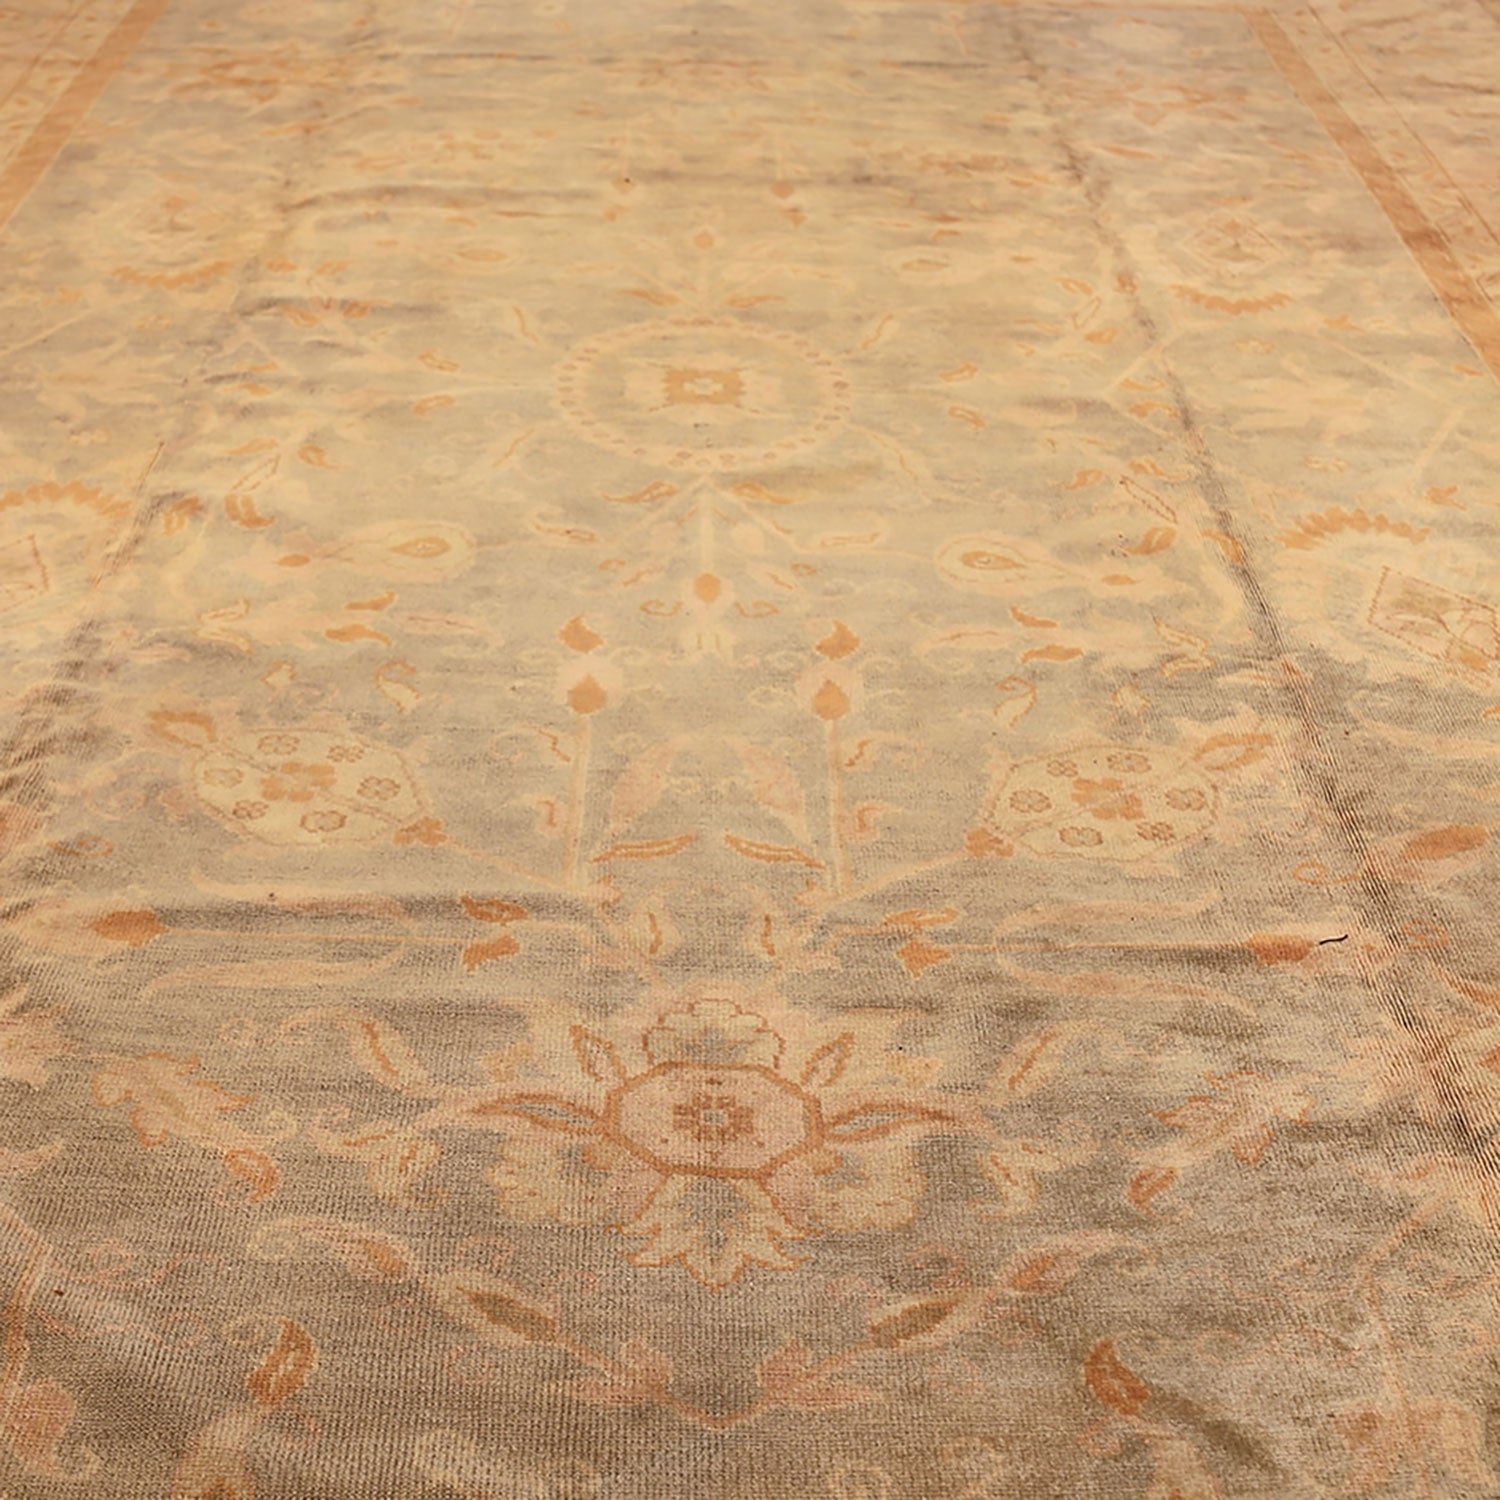 Close-up of vintage floral patterned carpet with subtle colors.